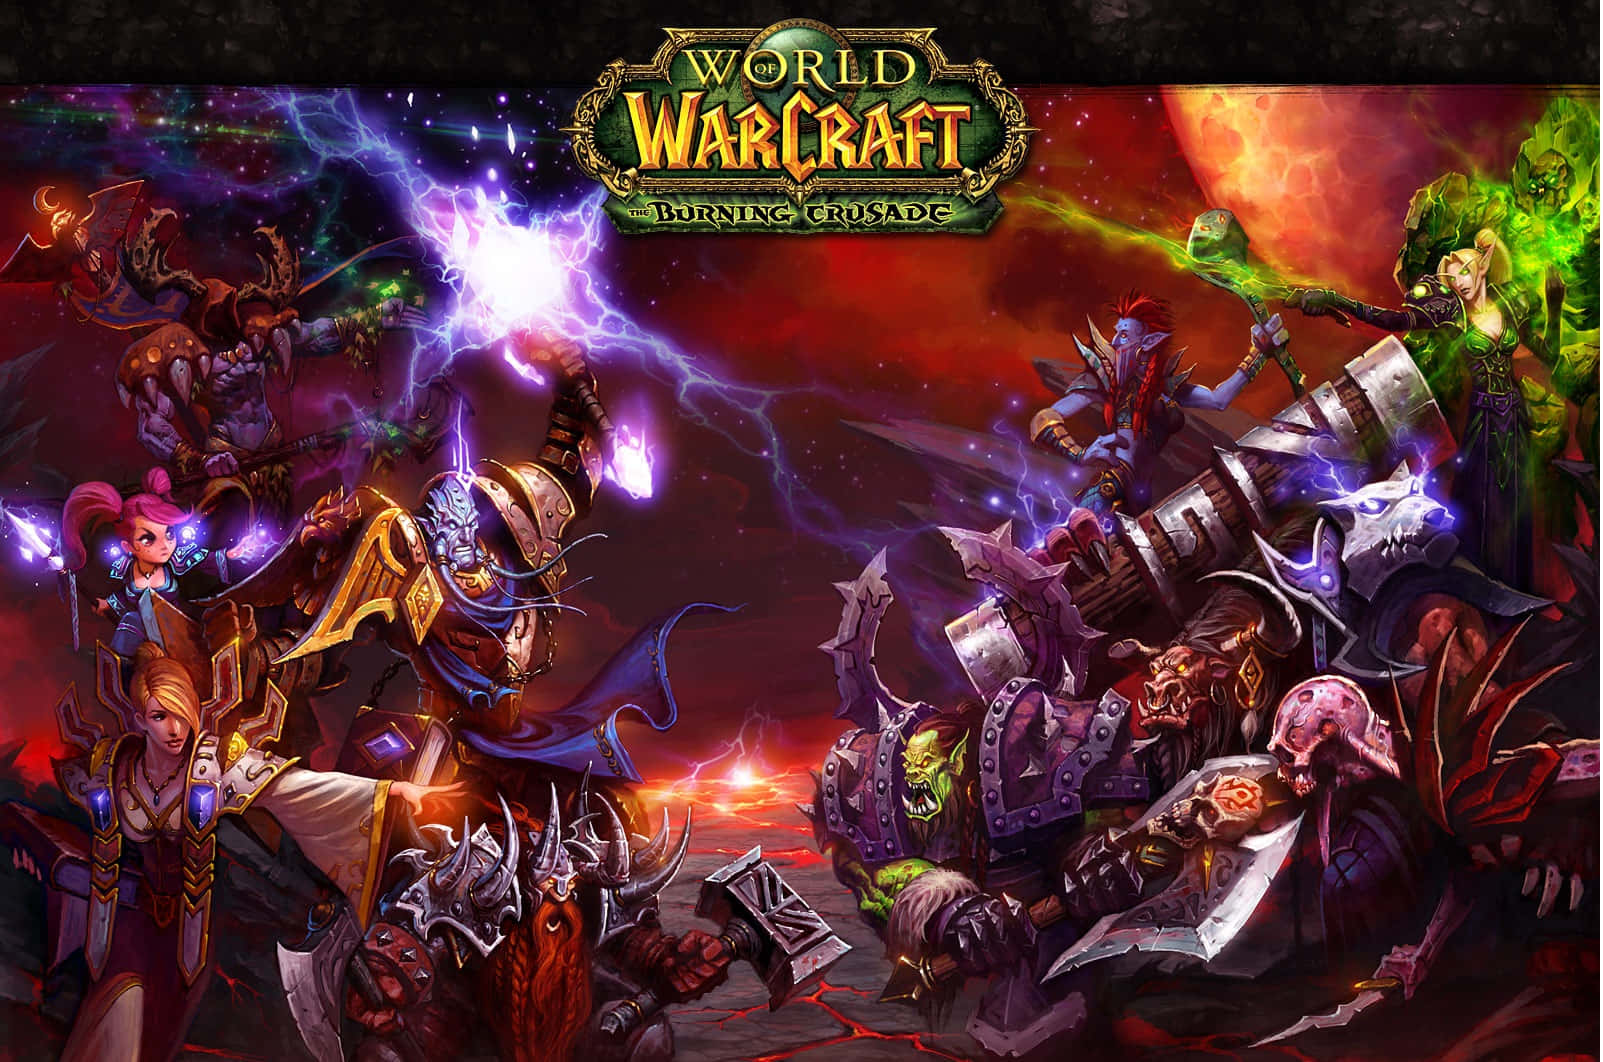 Epic Battle In The Burning Crusade, World Of Warcraft Wallpaper